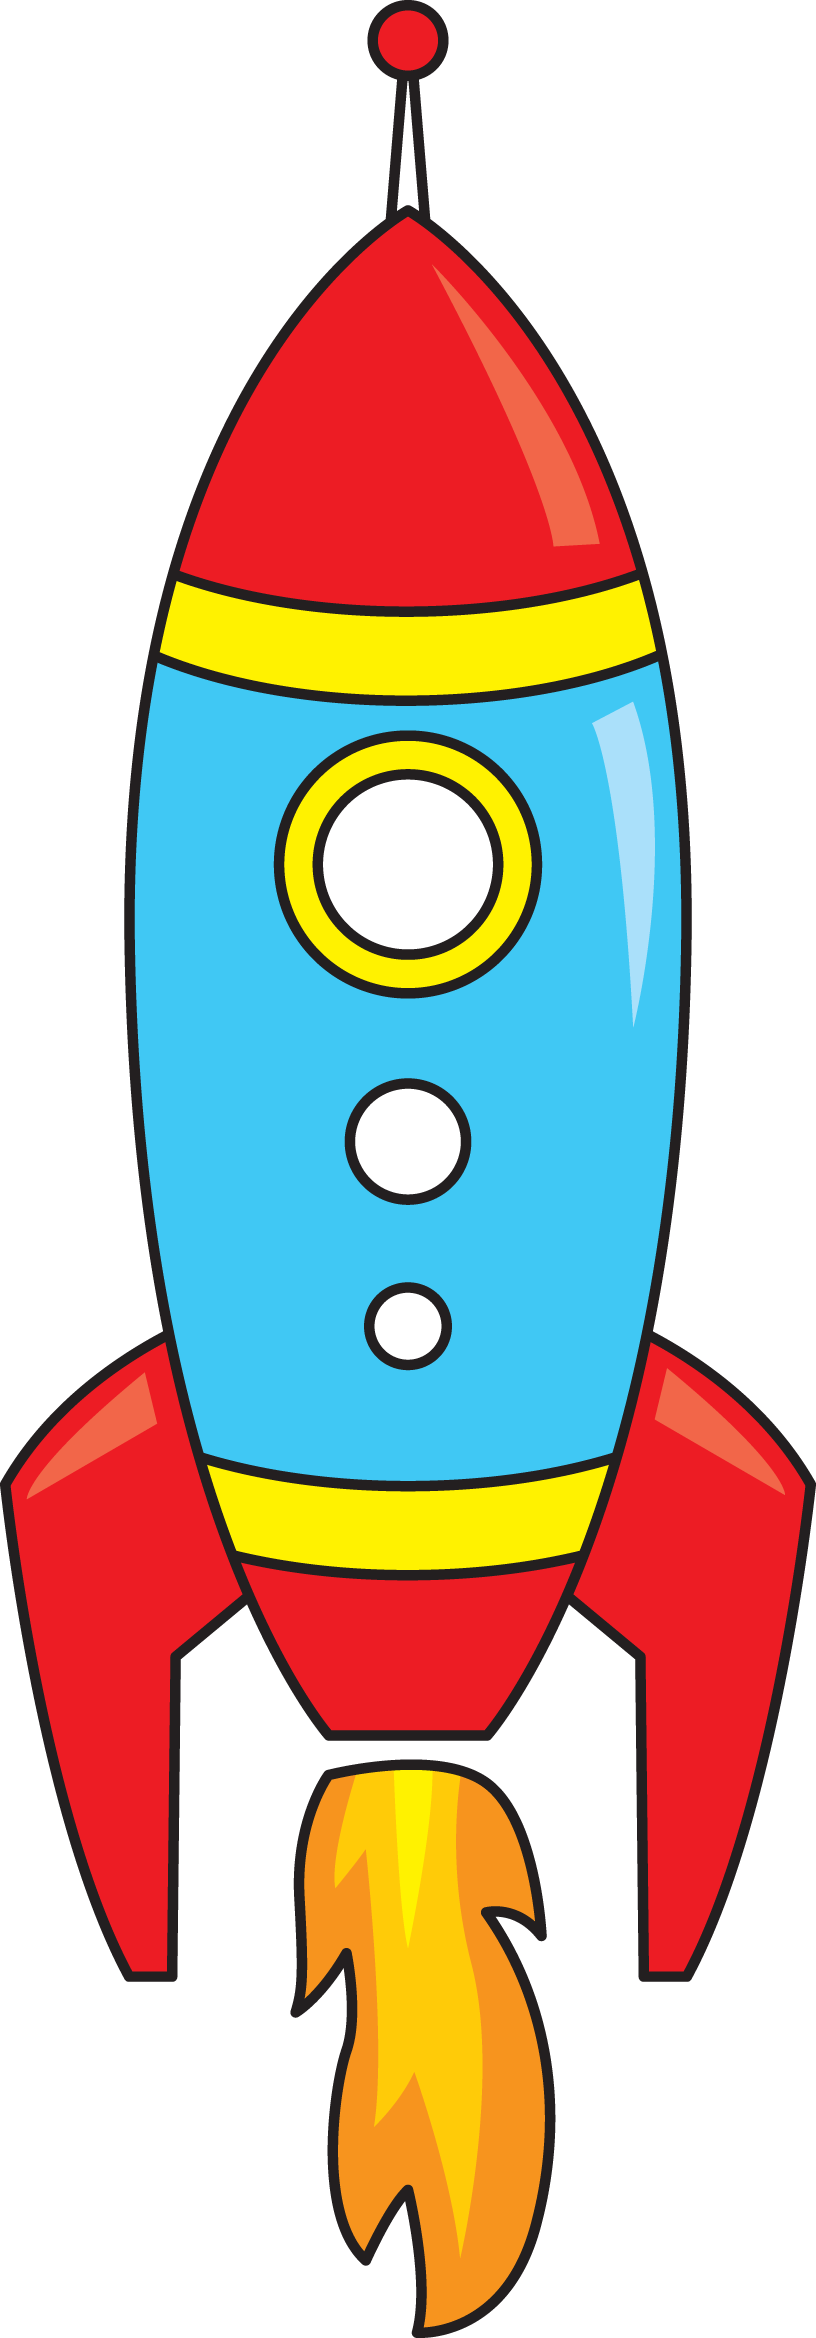 Rocket clipart for kids